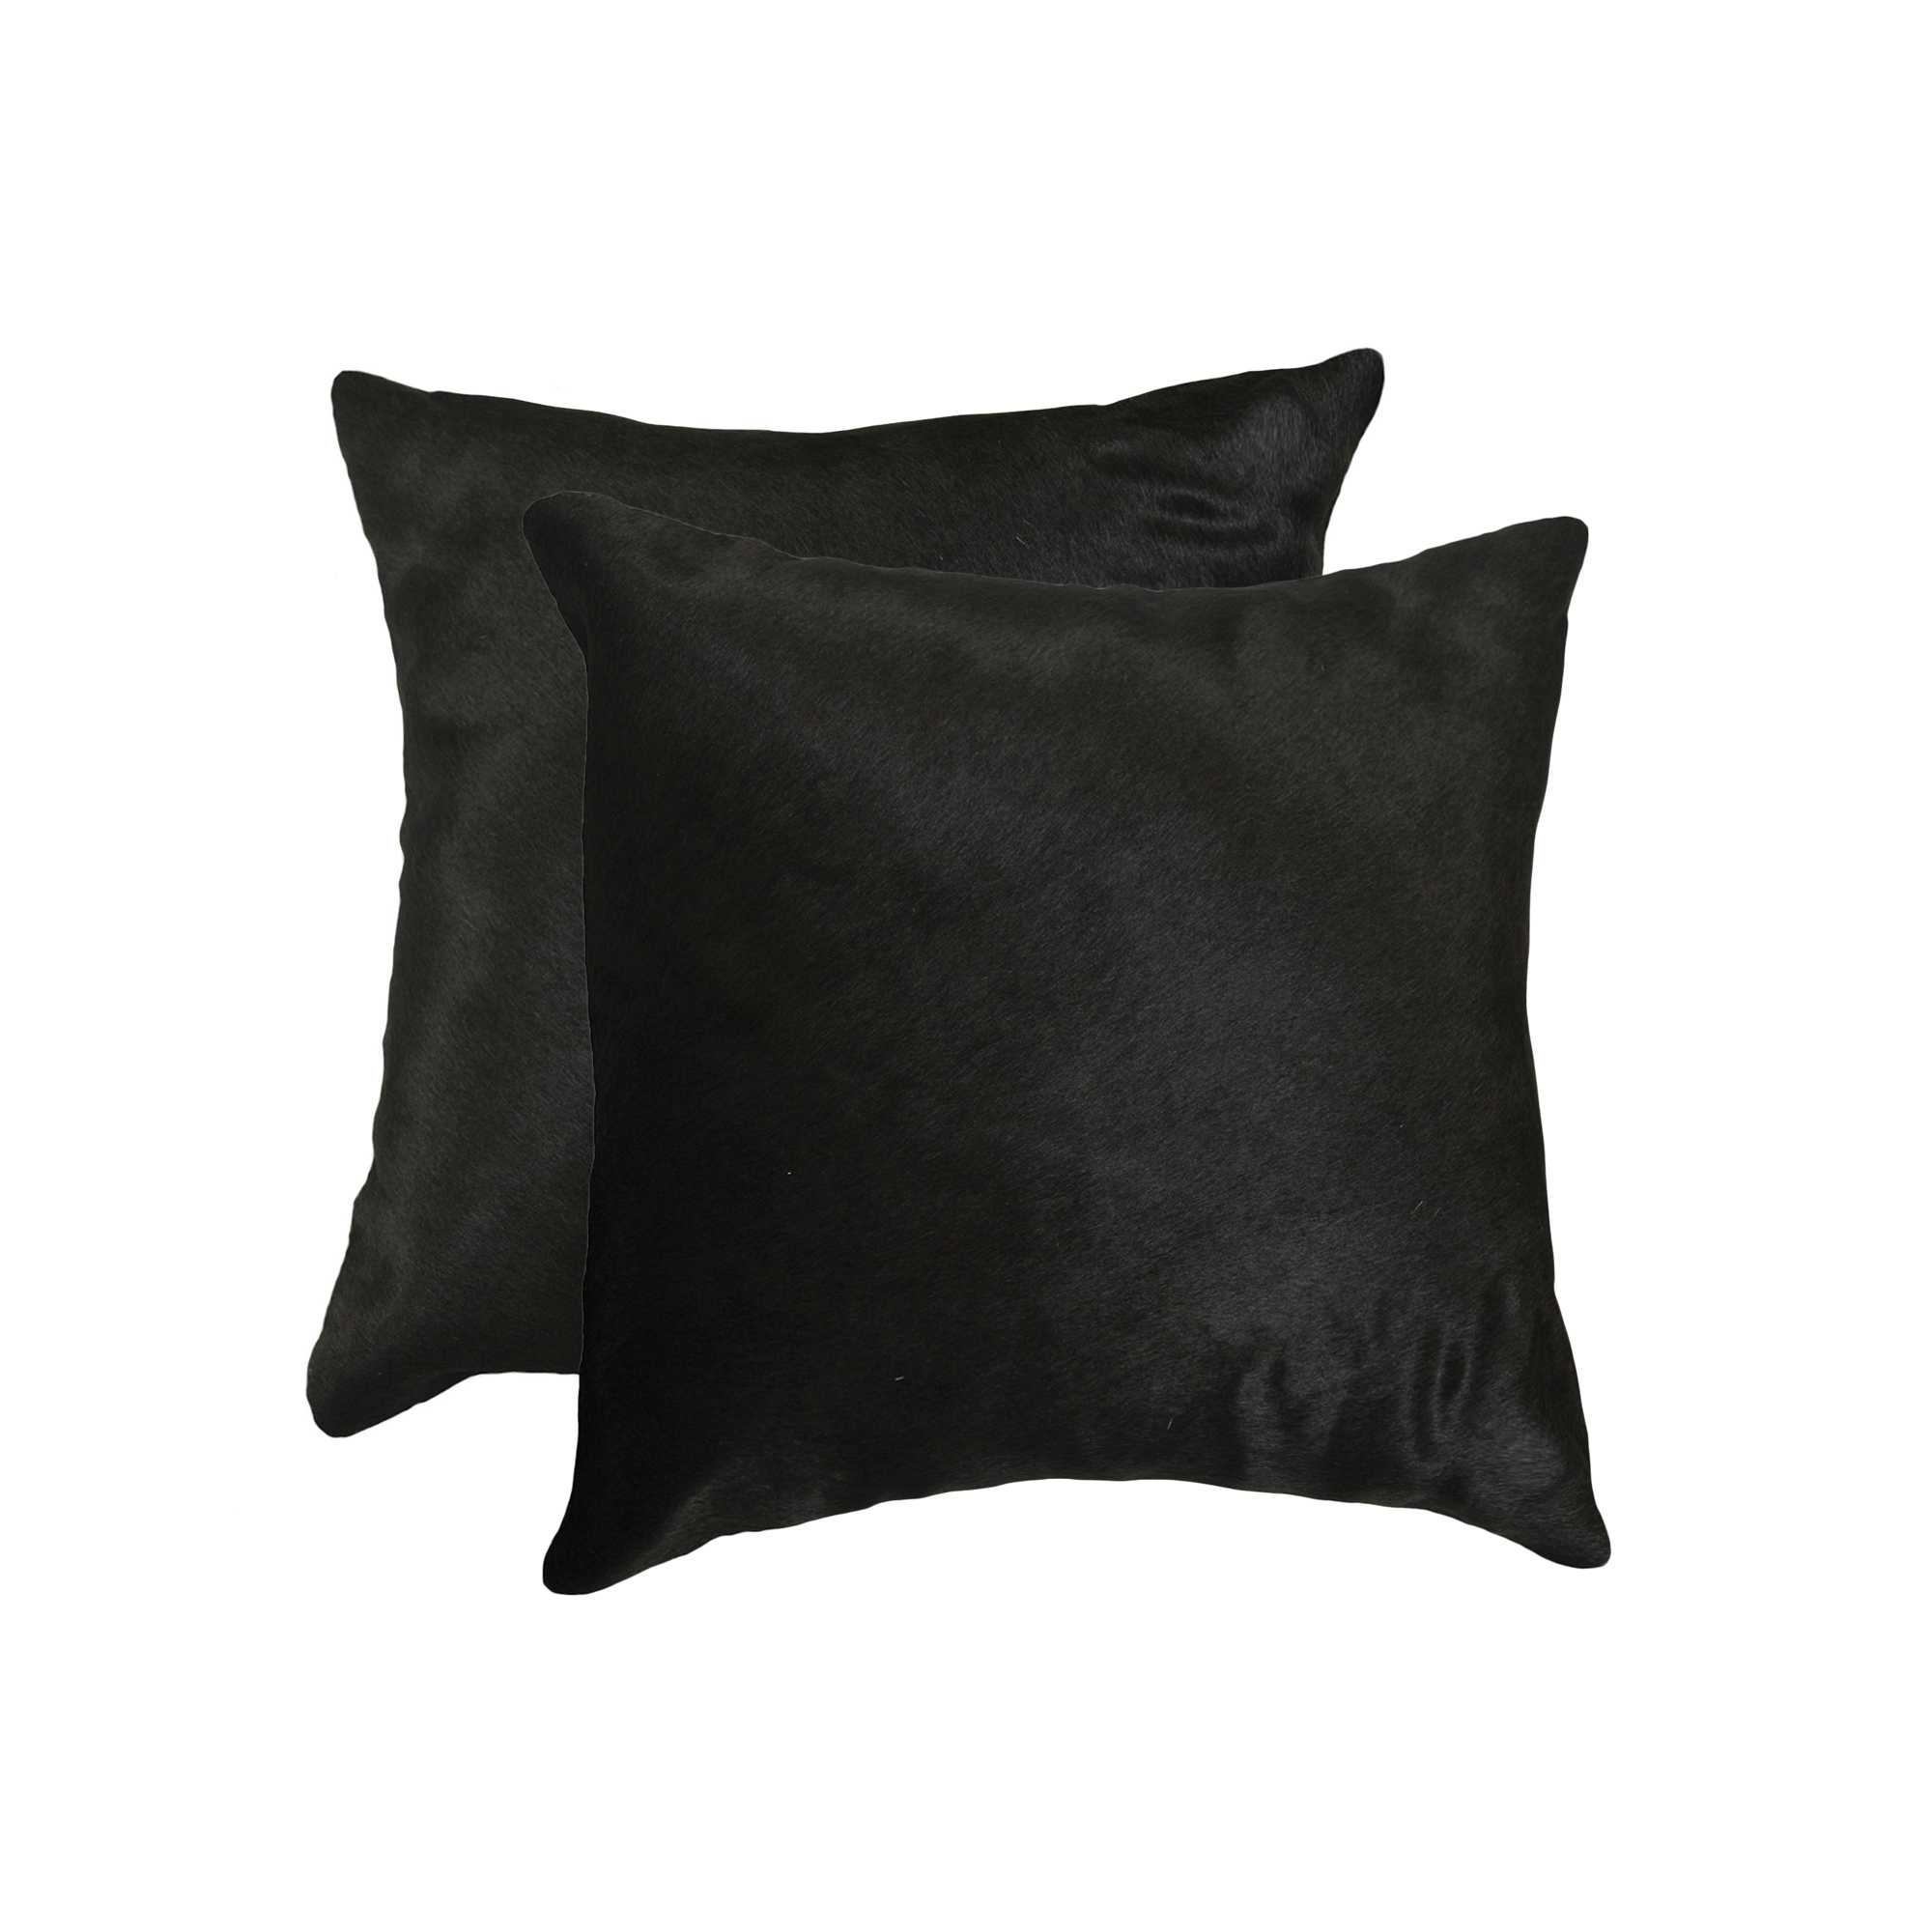 18" x 18" x 5" Black Torino Cowhide - Pillow 2-Pack